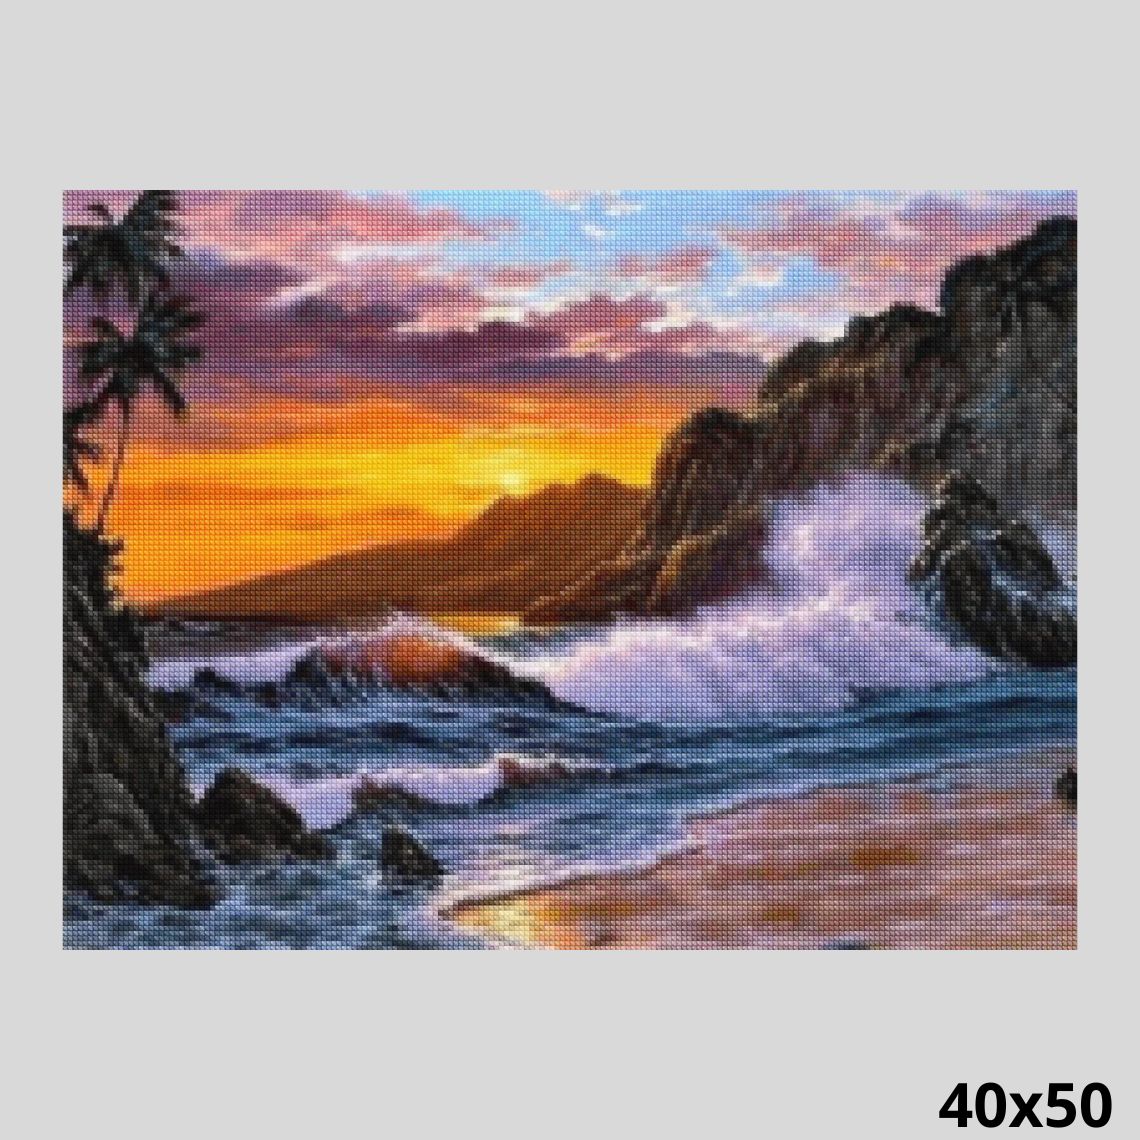 Sunset Waves Rocks 40x50 - Diamond Painting